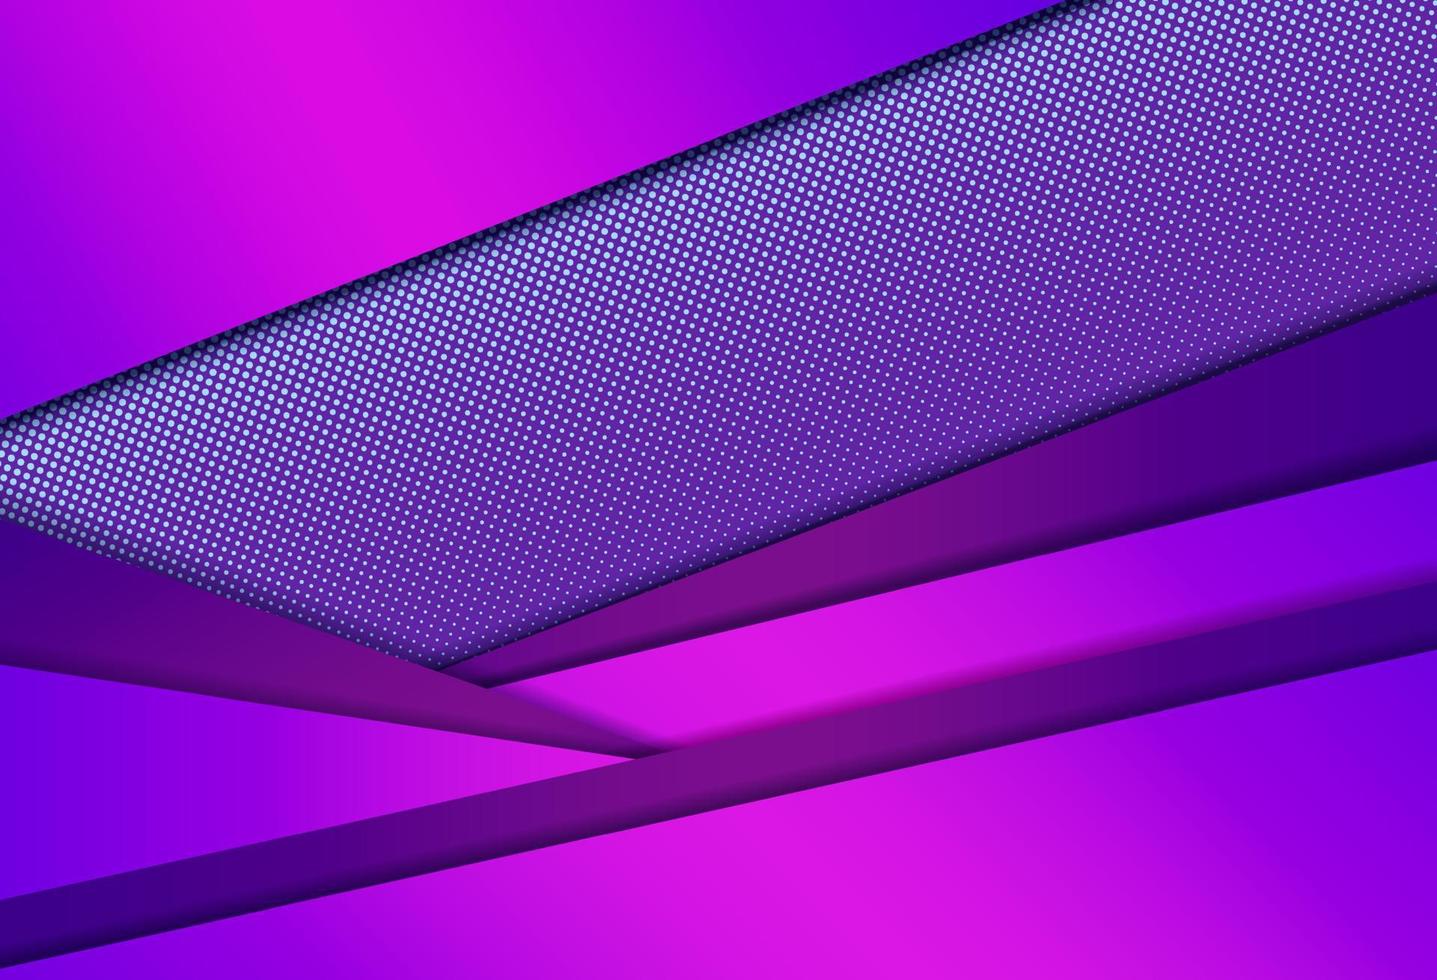 abstrakt diagonal halvtonsstruktur på mörk bakgrund med kopia utrymme. futuristisk dynamisk mönsterdesign. modernt enkla prickmönster. vektor illustration